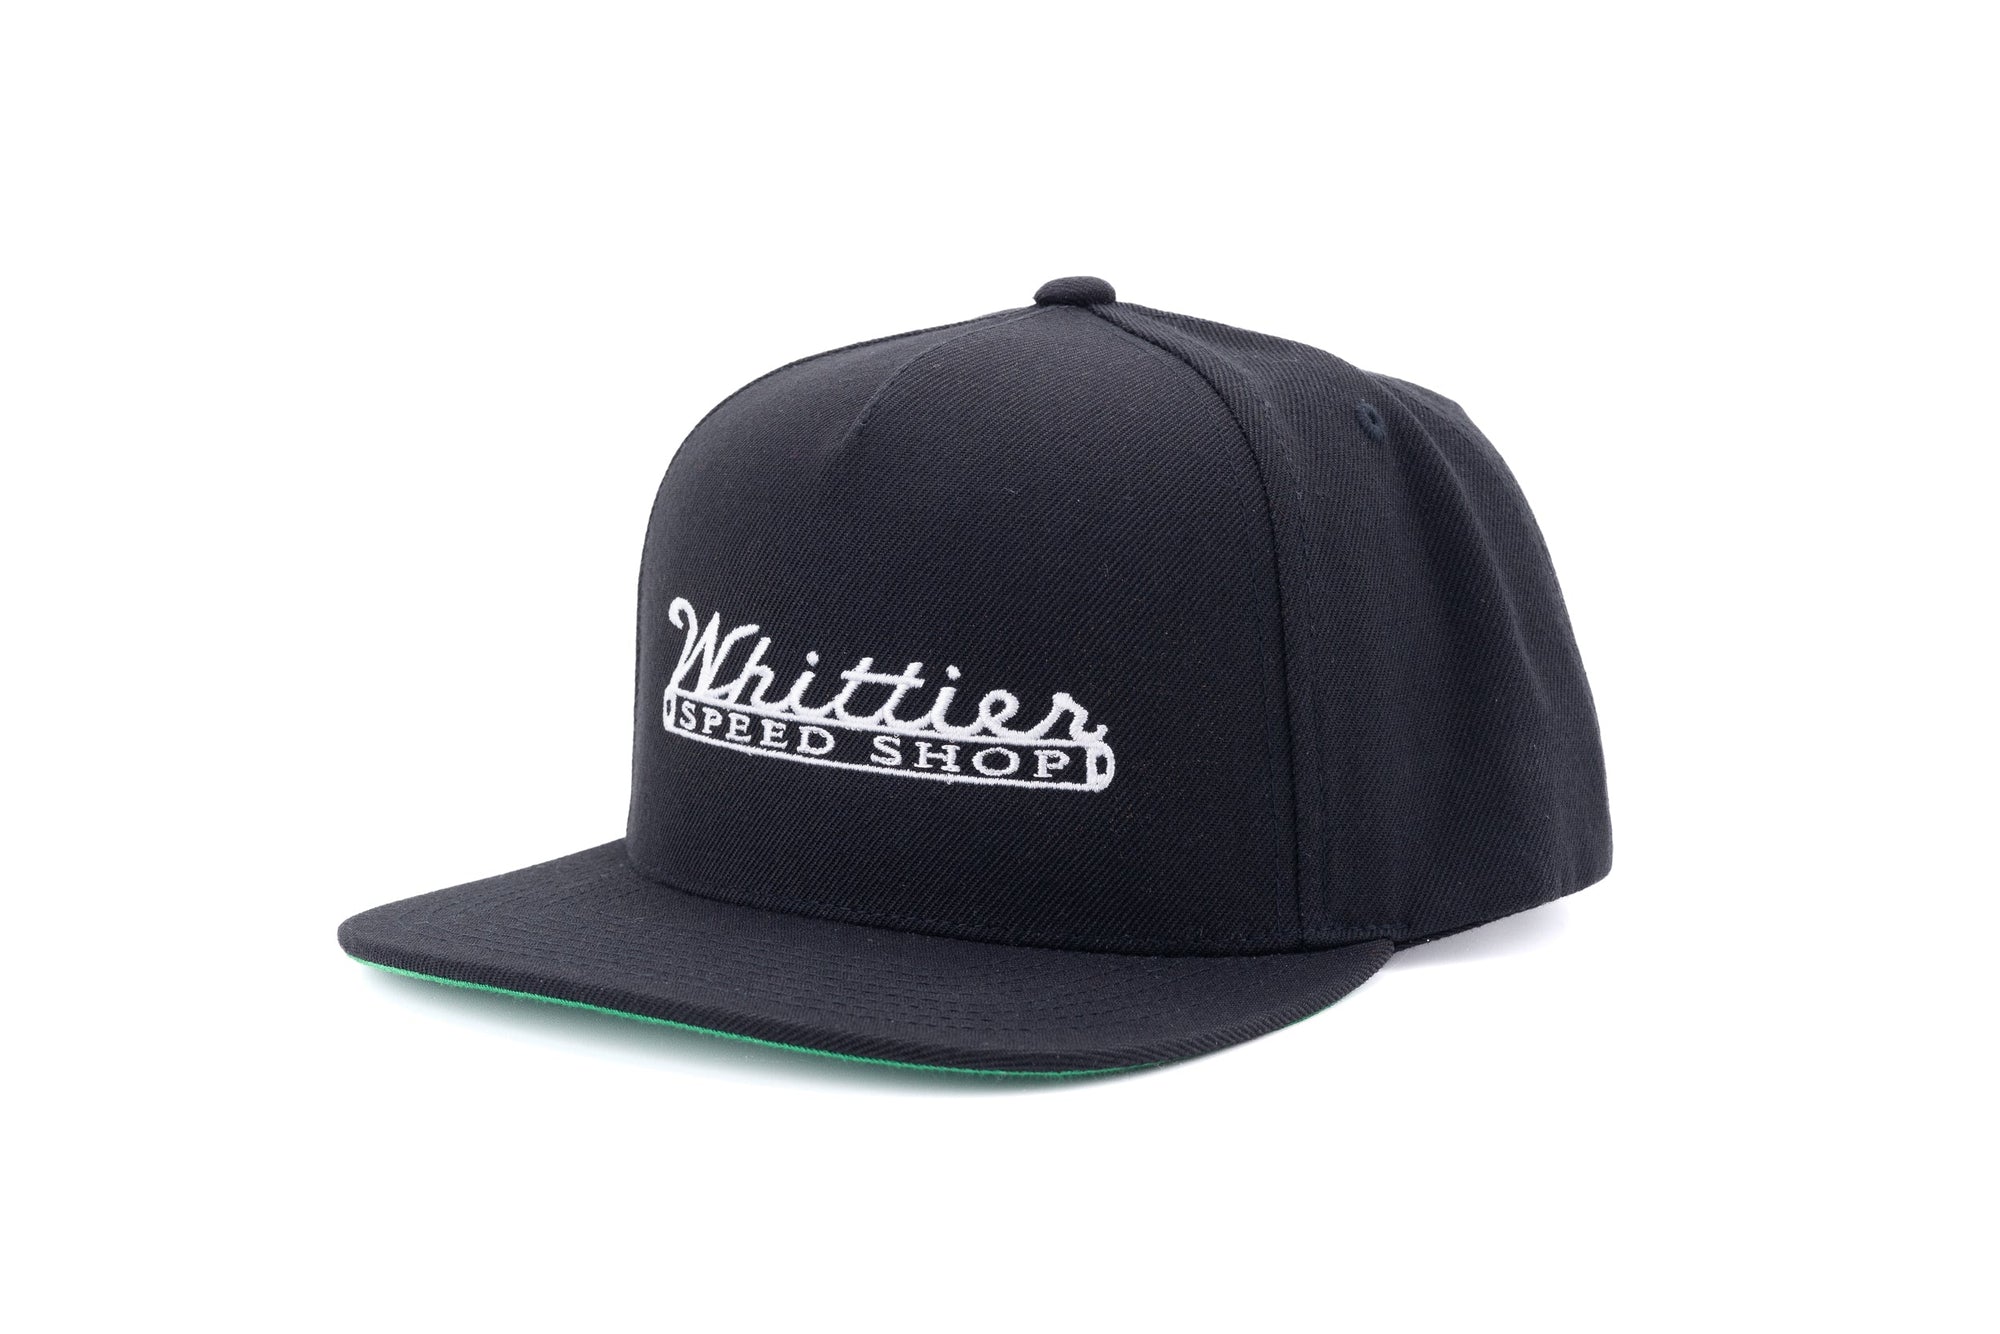 Whittier Speed Shop Topper Snapback Baseball Cap